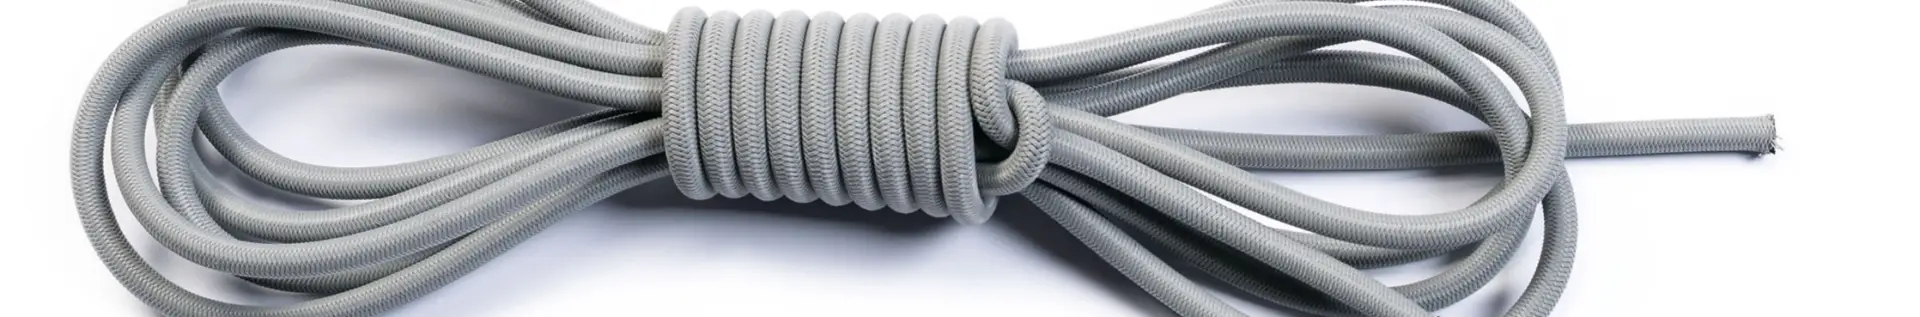 Stainless steel hooks with elastic cord - Cod. CO008EGINOX